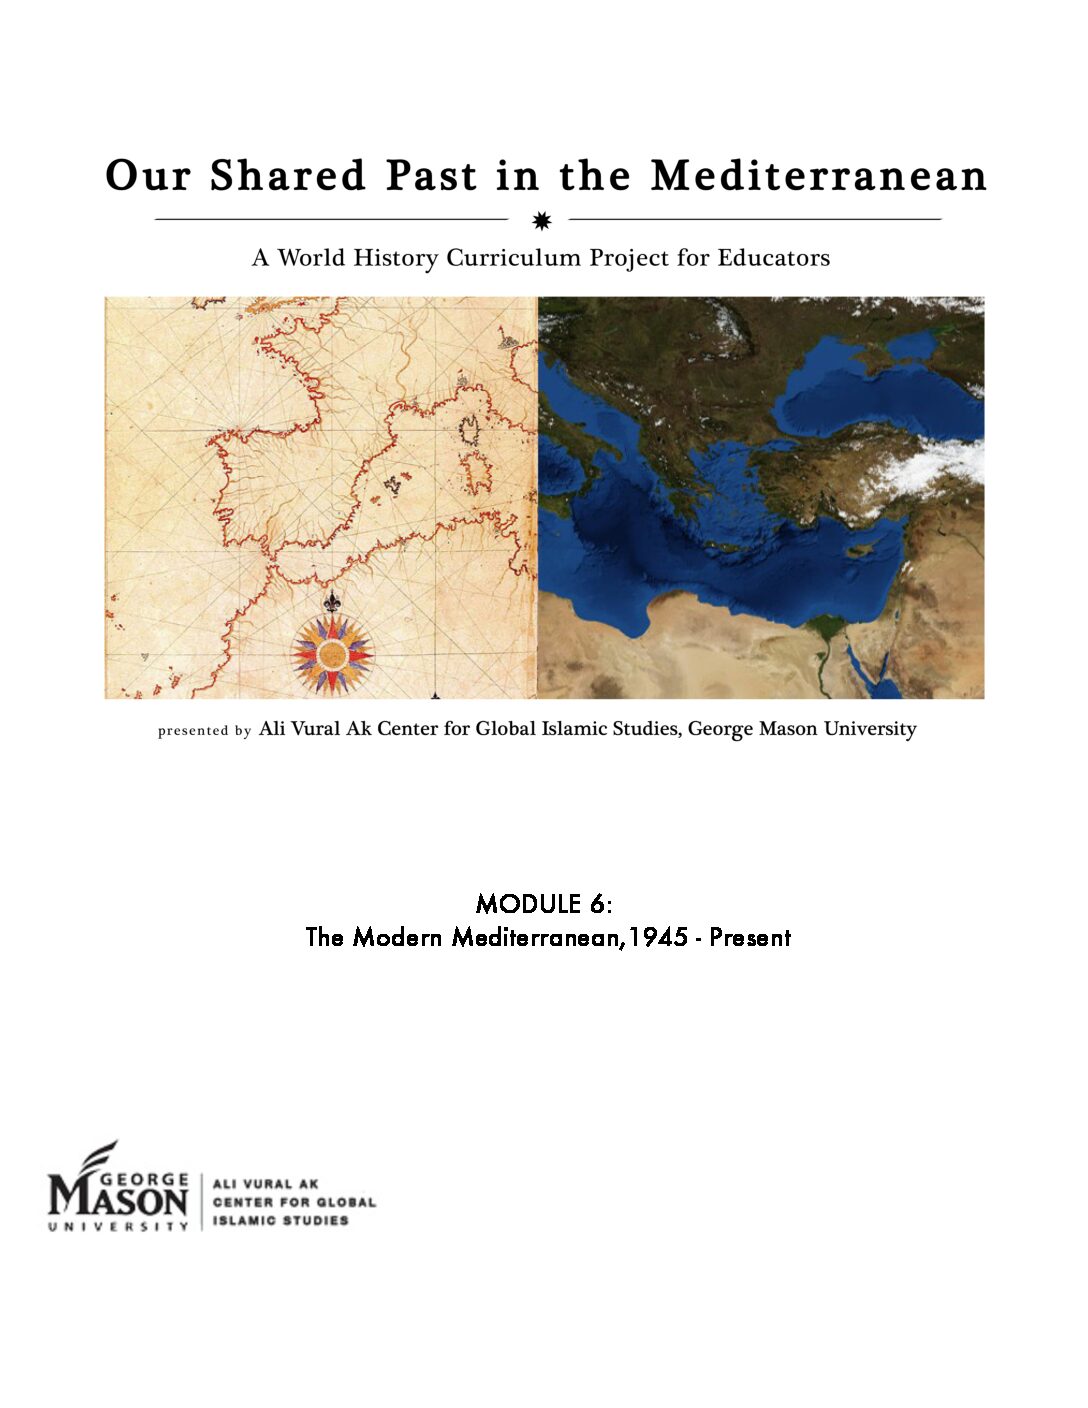 OSPM-Module-6-The-Modern-Mediterranean-1945-Present.pdf